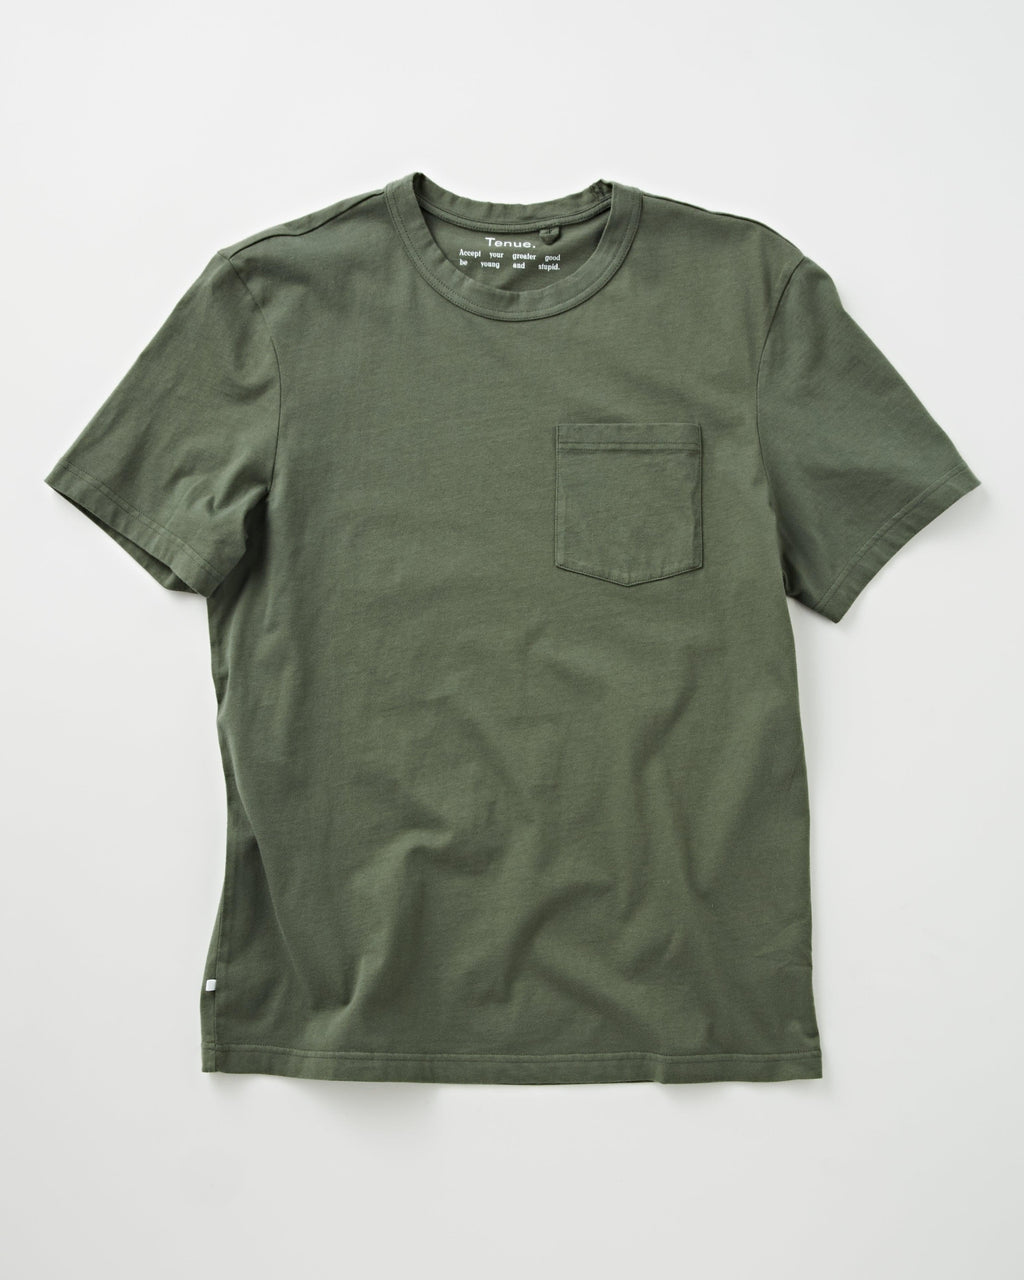 Tenue. John Pocket Tee Jade T-shirt S/S Men